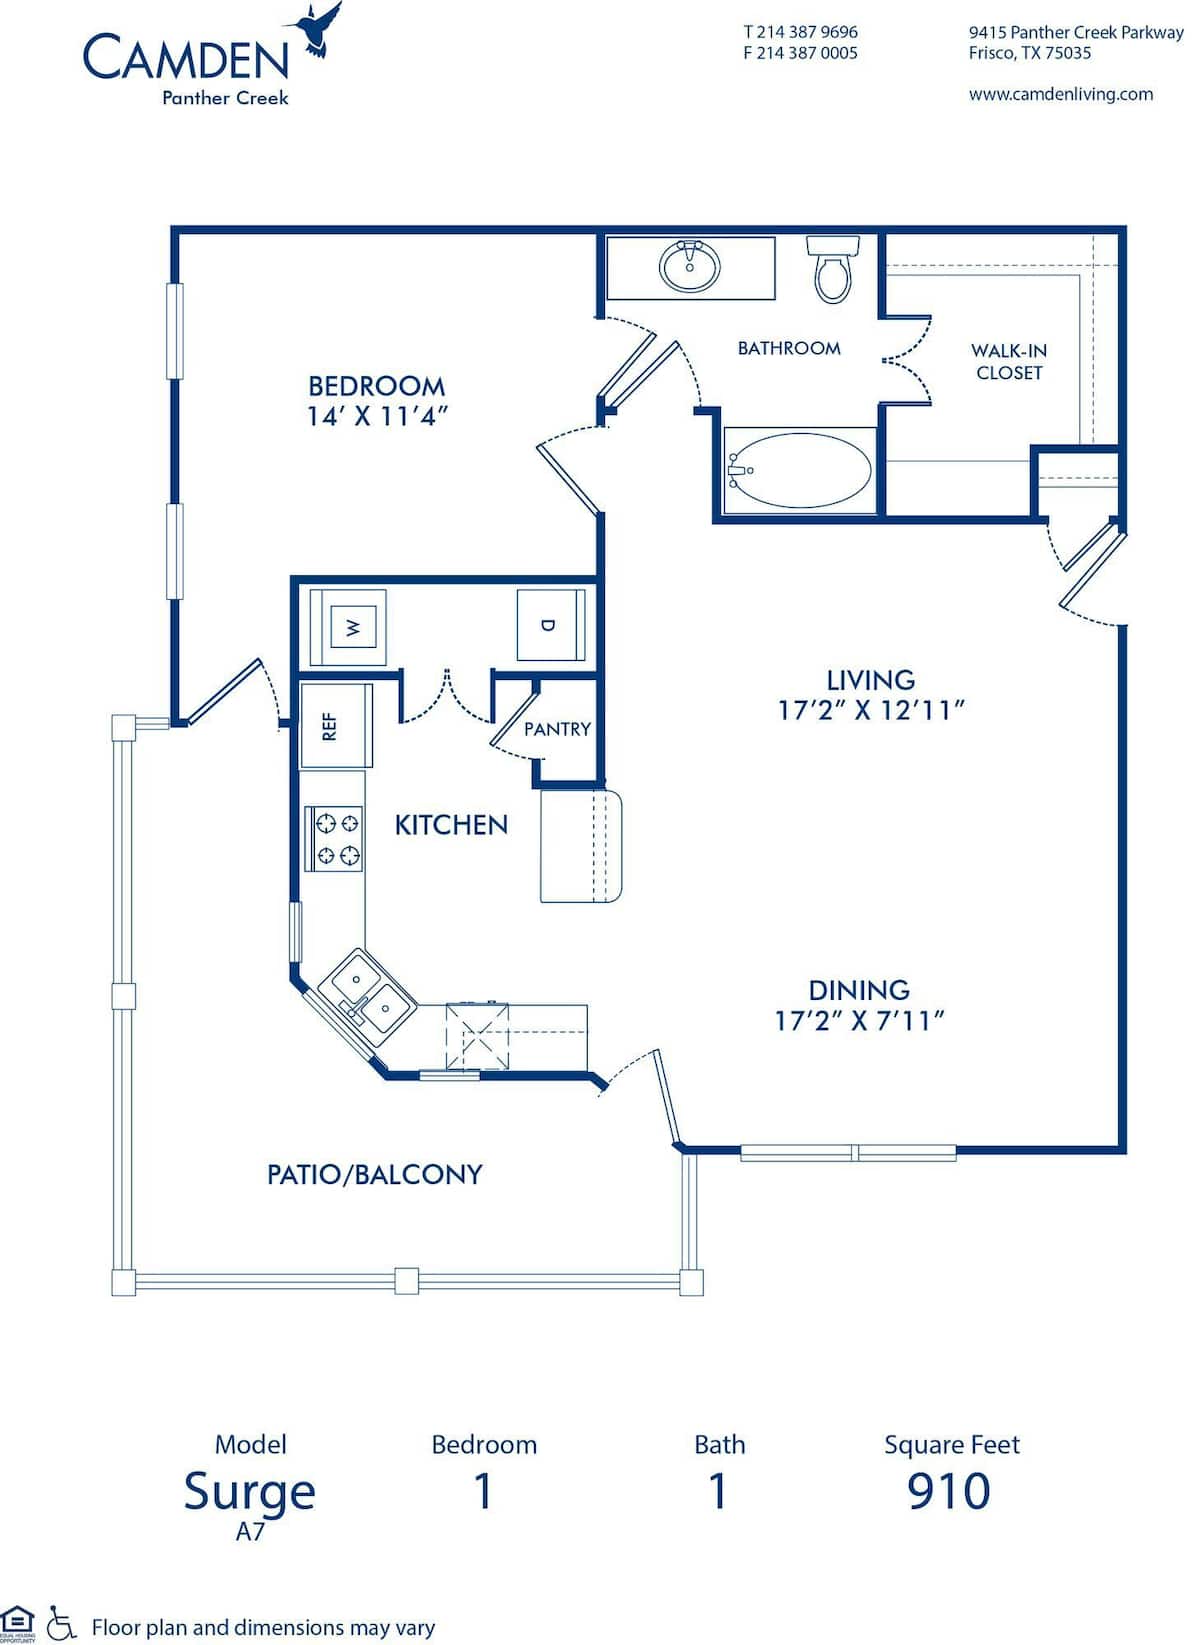 Floorplan diagram for Surge, showing 1 bedroom